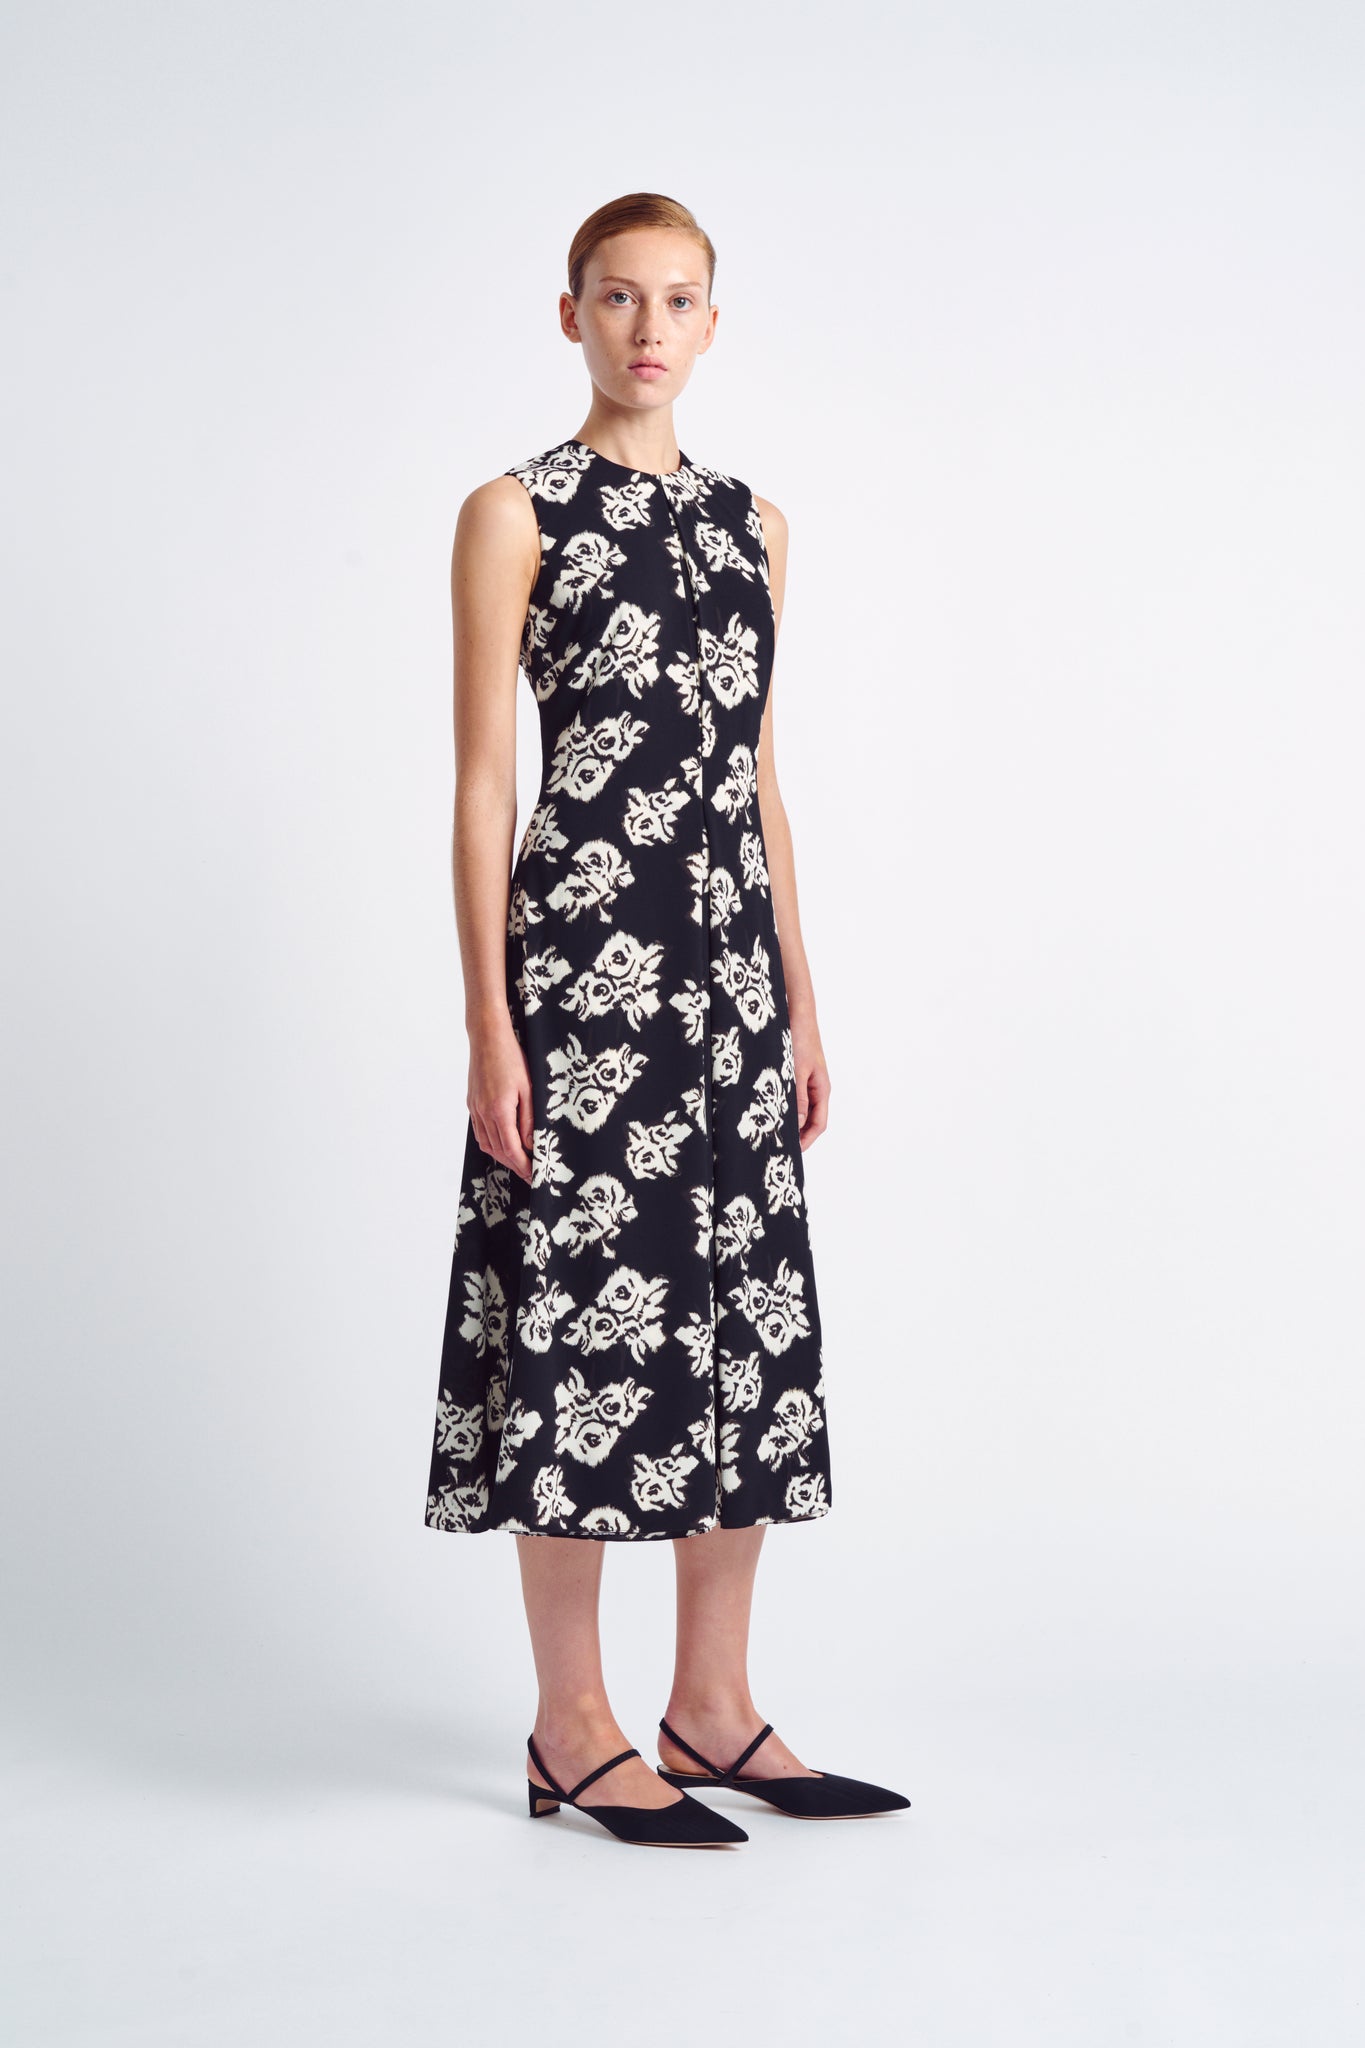 Ottilie Dress | Black and White Floral Printed Sleeveless Dress | Emilia Wickstead